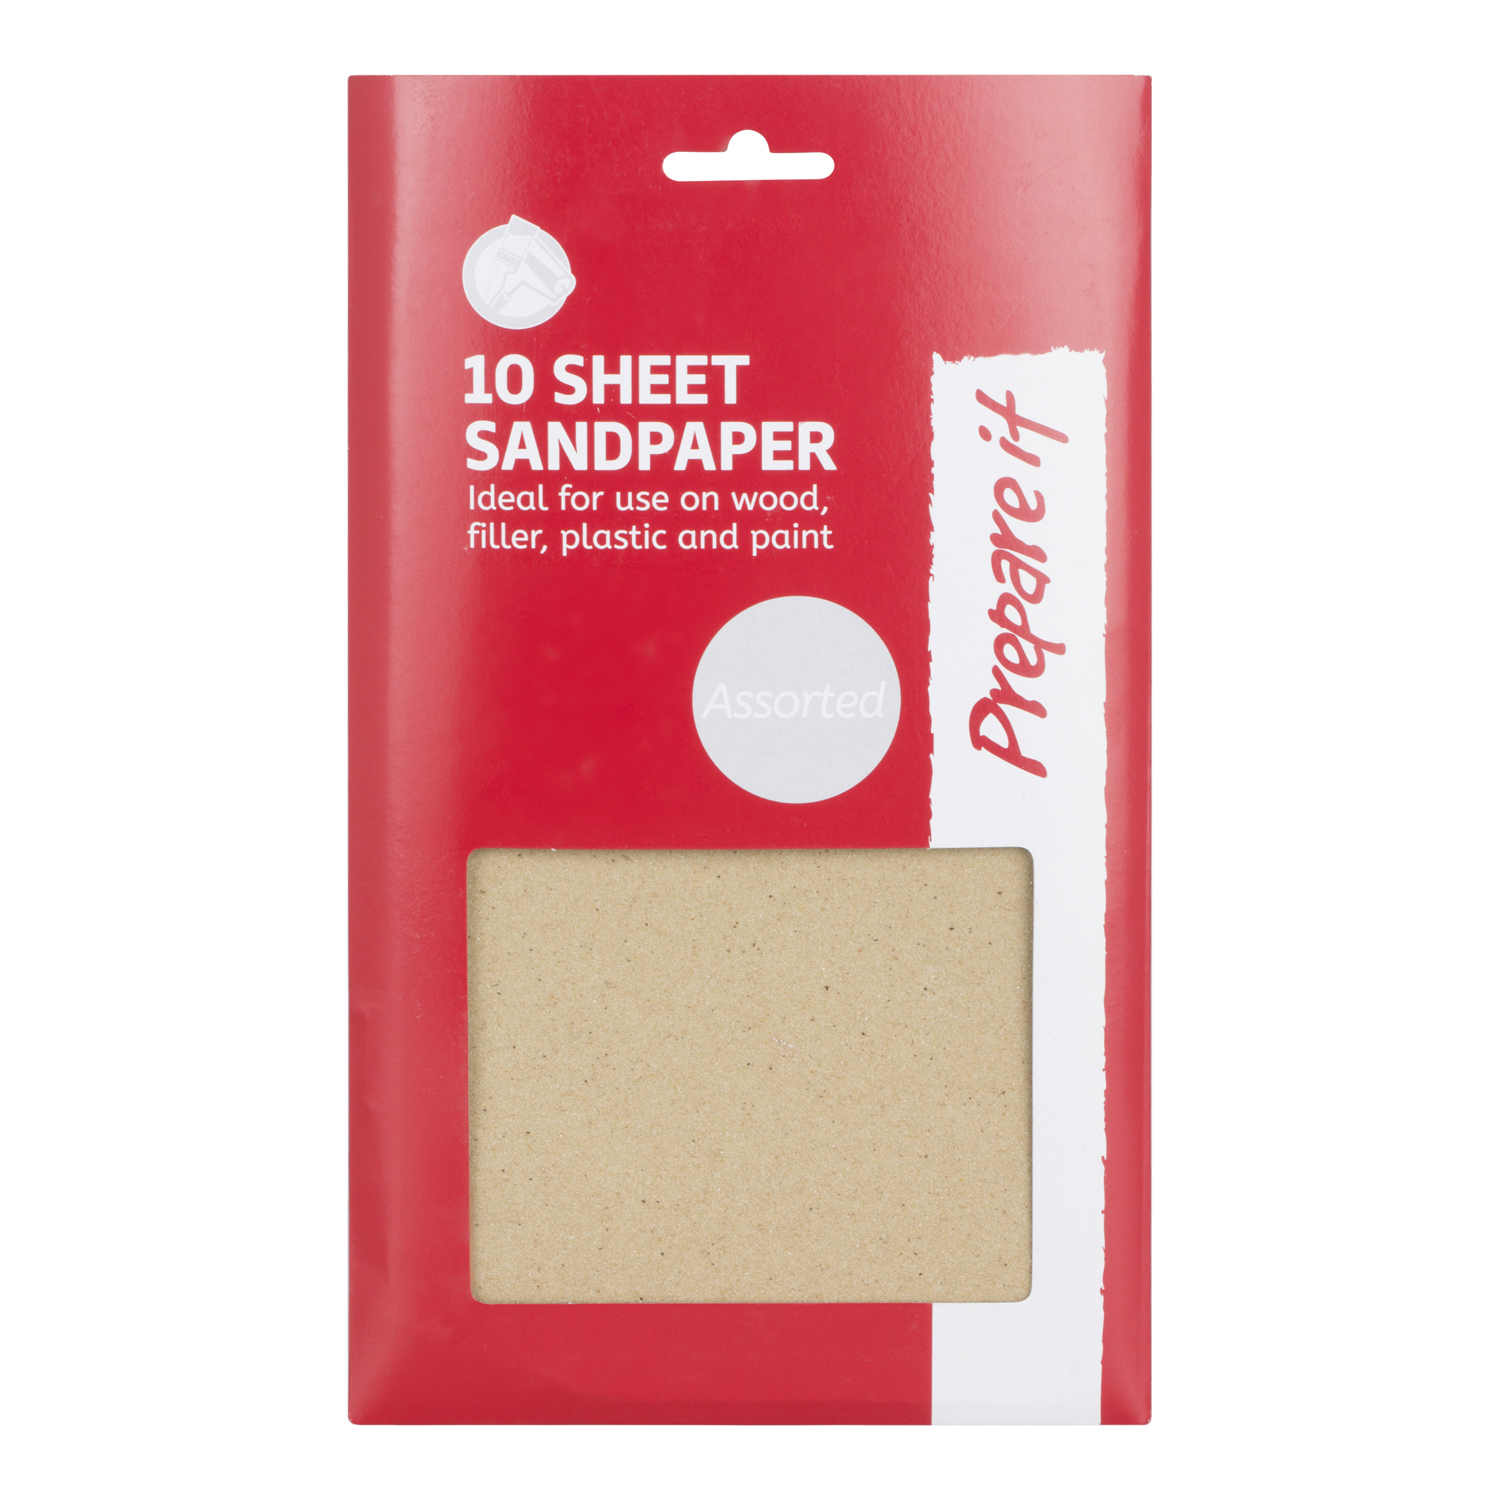 Prepare It Assorted Sandpaper Sheet 10 Pack Image